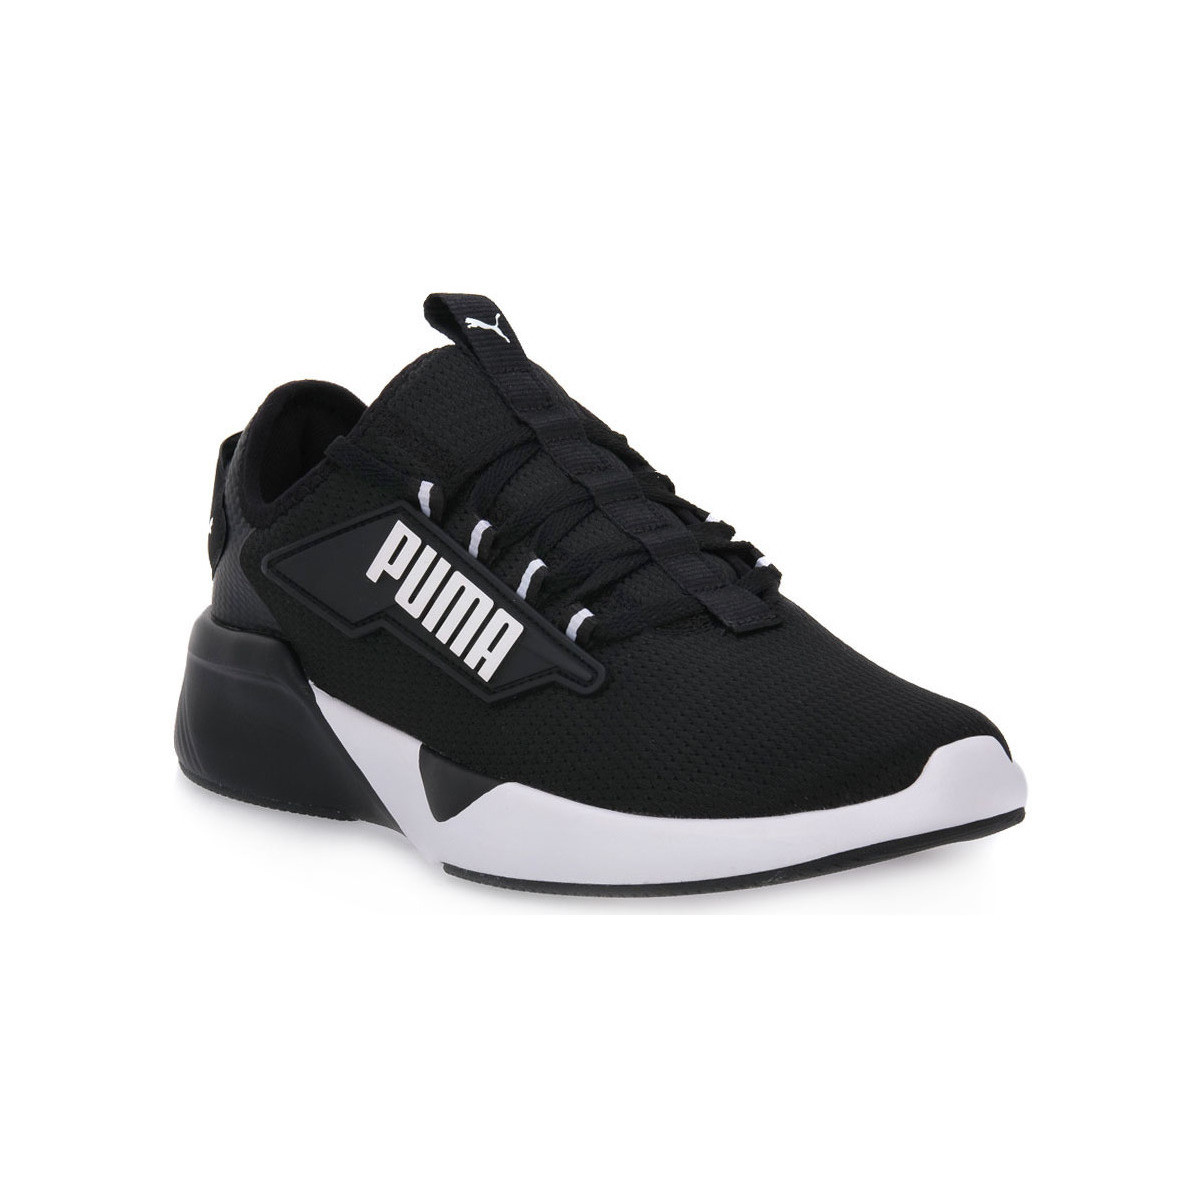 Schoenen Dames Sneakers Puma 01 RETALIATE 2 JR Zwart